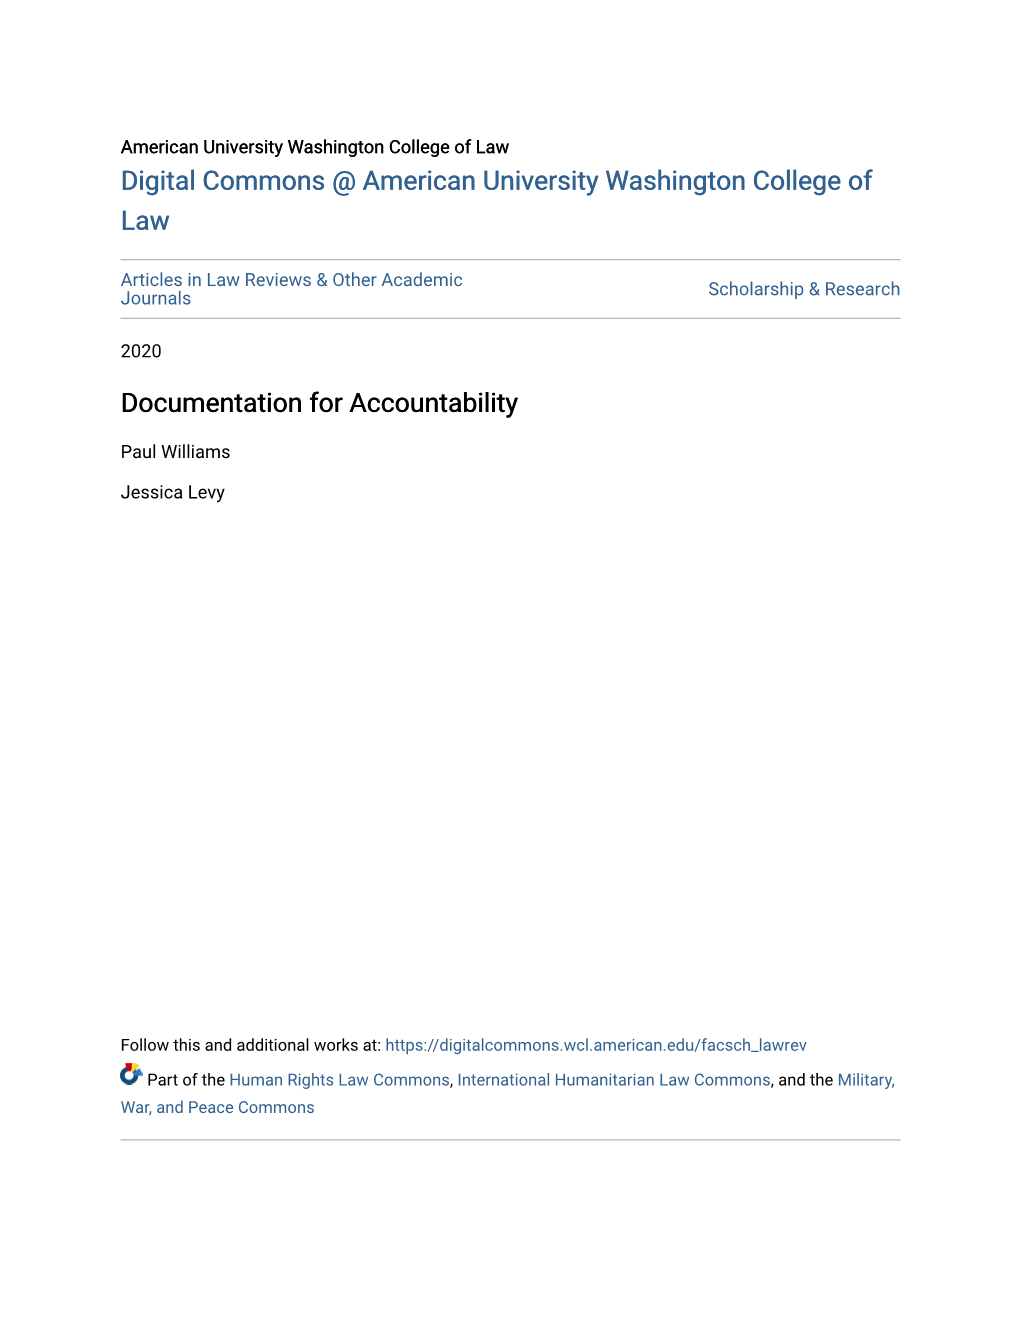 Documentation for Accountability